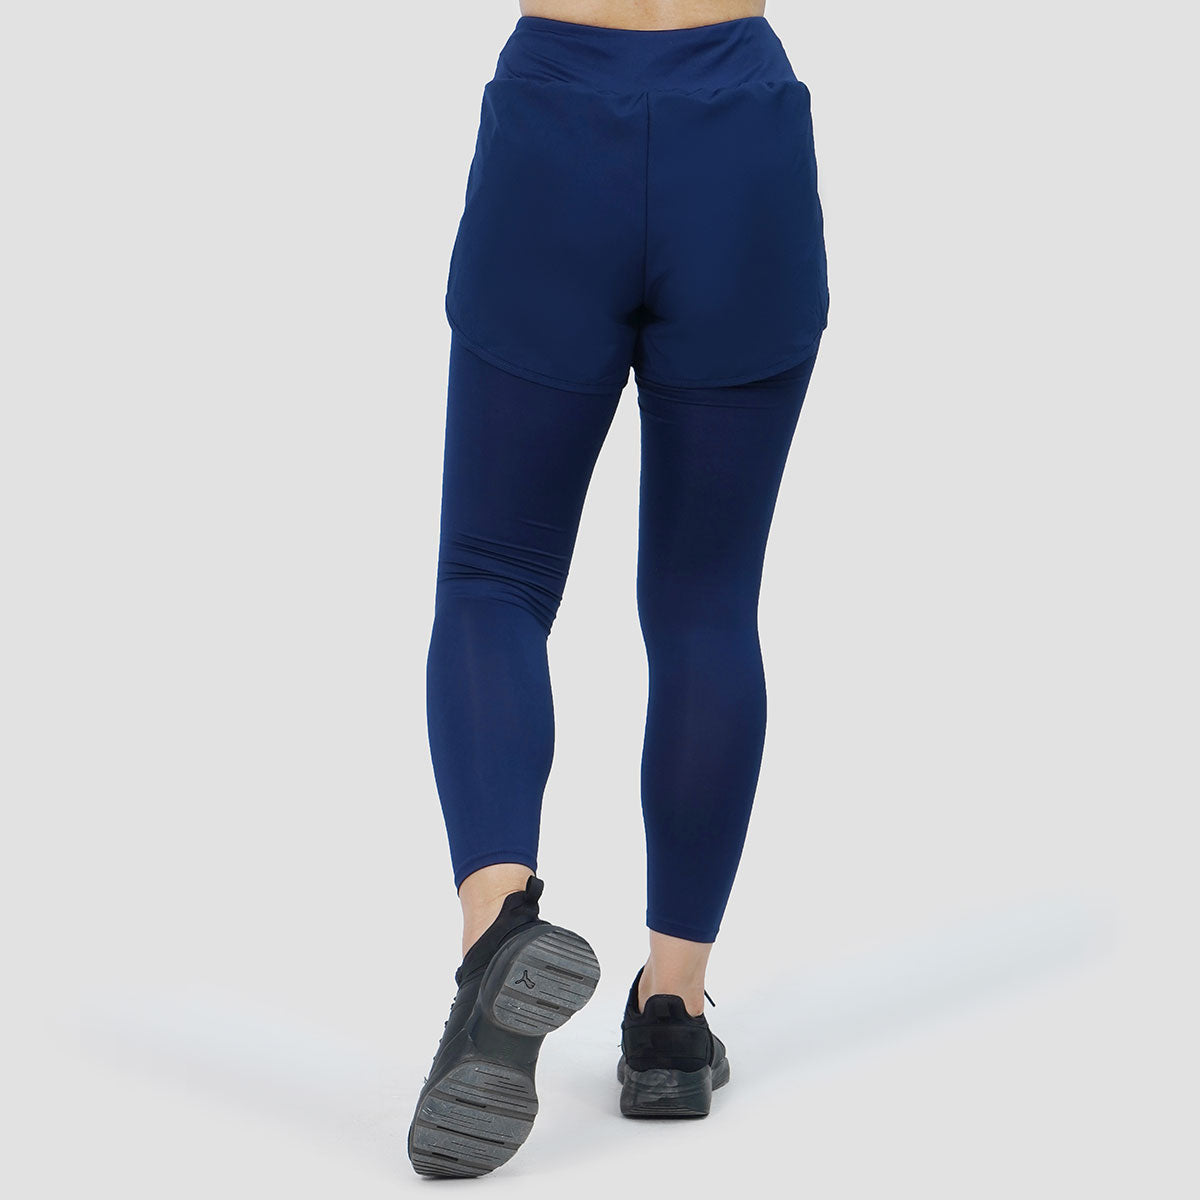 Compression Legging Shorts (Blue)